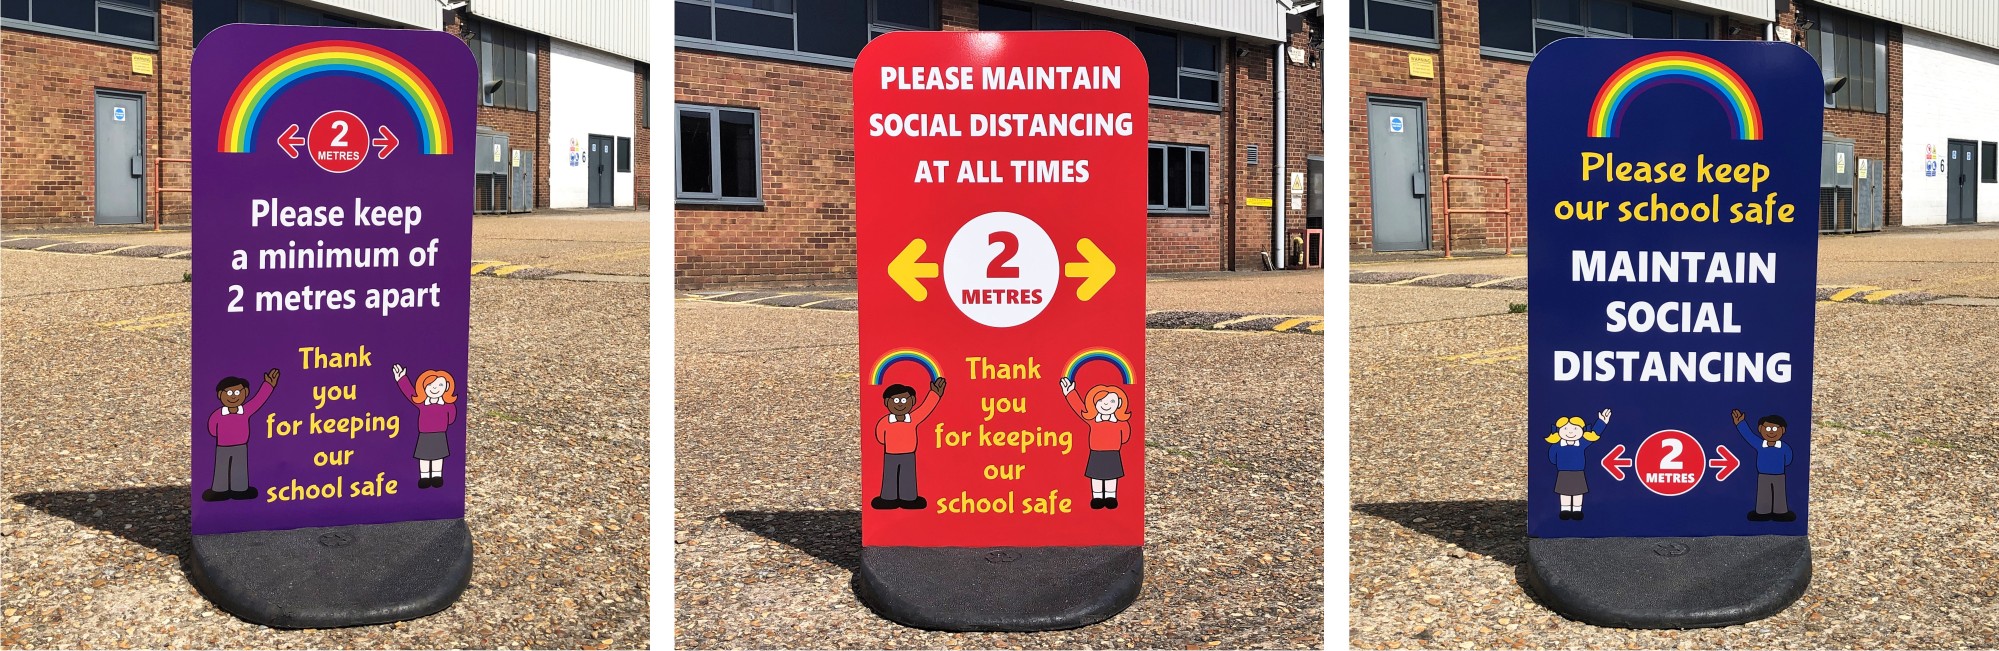 social distancing signs for schools